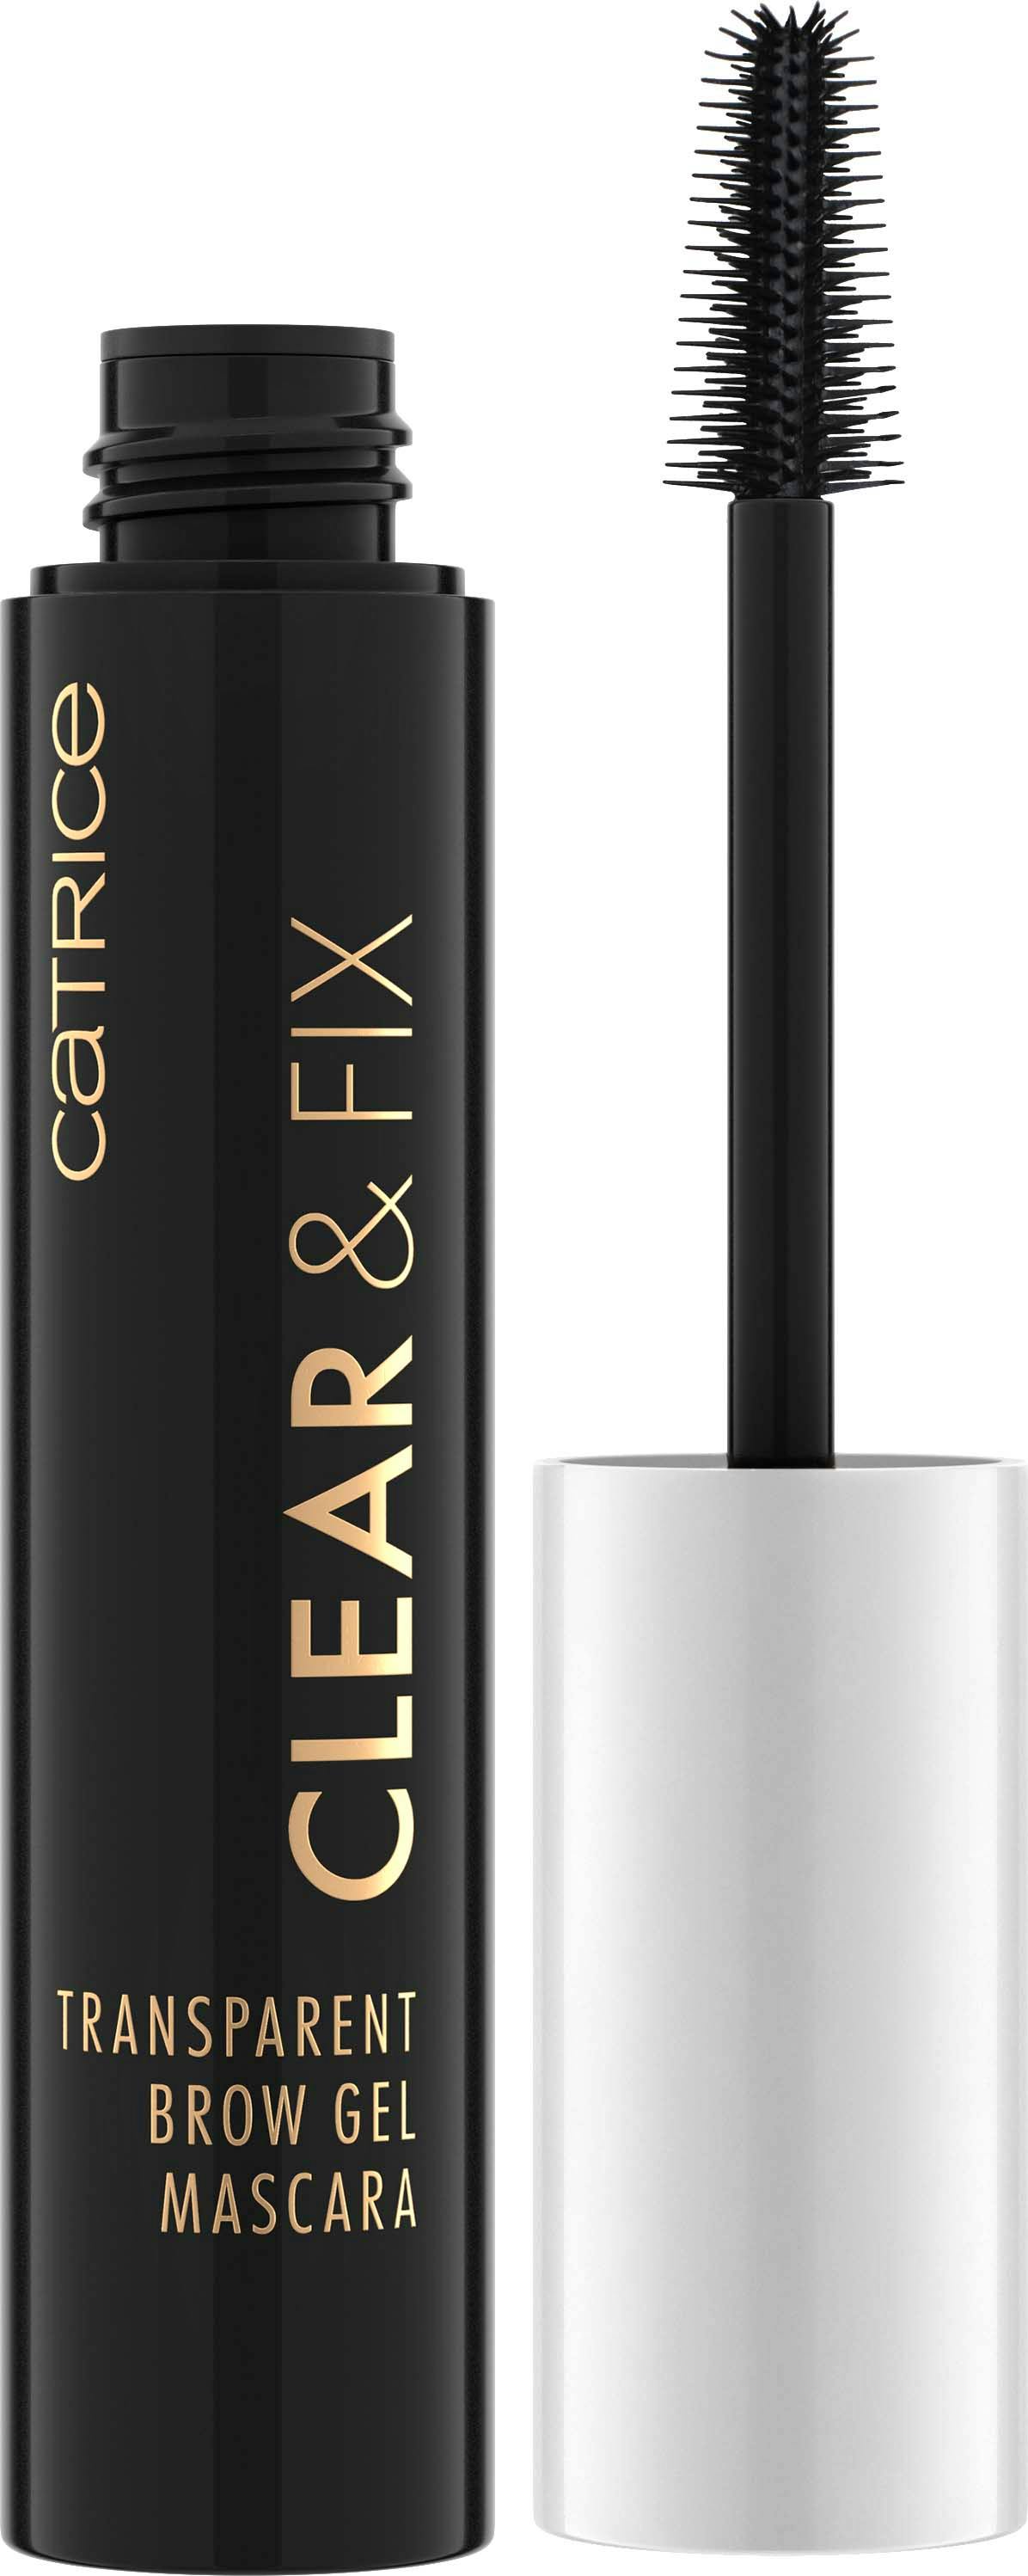 Catrice Clear & Fix Transparent Brow Gel Mascara 5 ml - £2.75